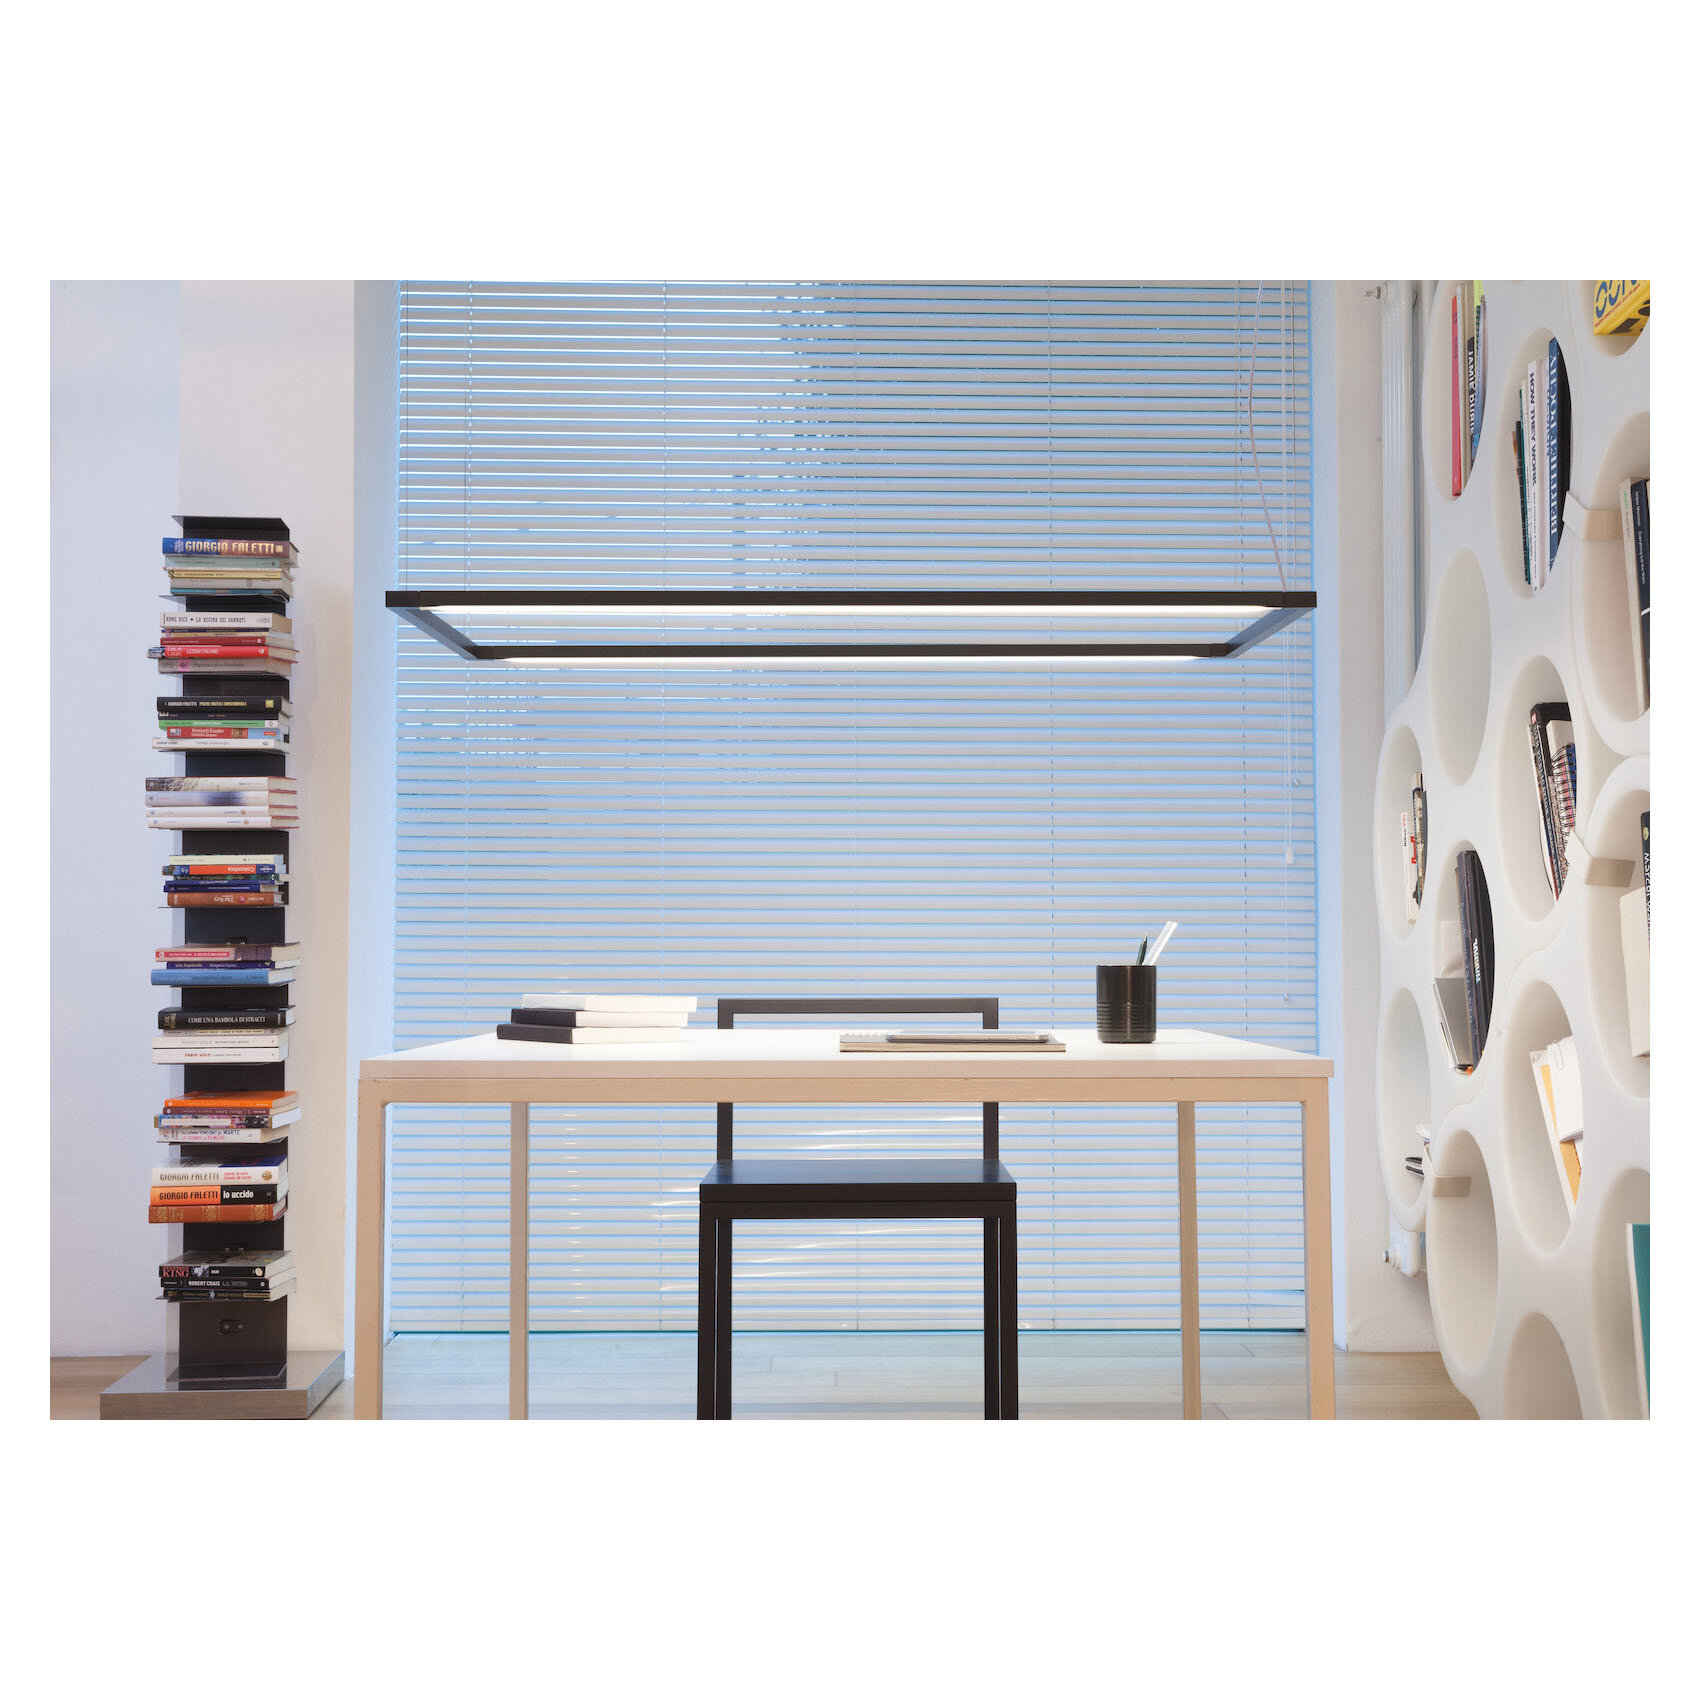 NEMO Spigolo Horizontal 長方形框LED極簡吊燈用於書桌上